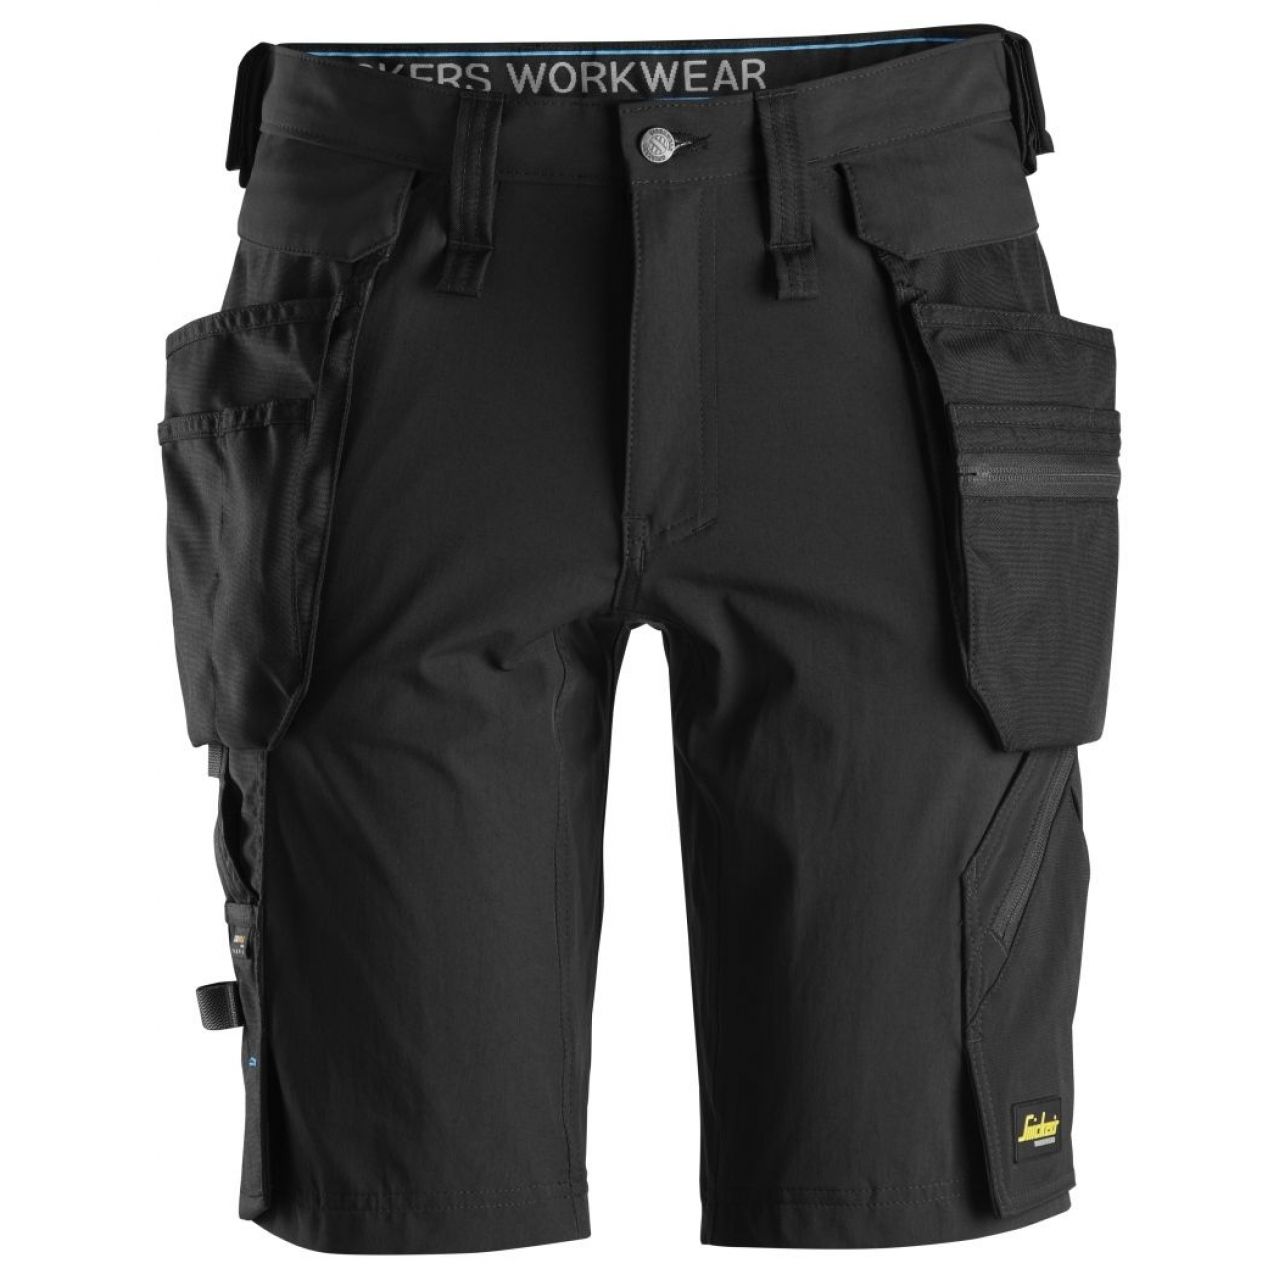 Pantalon corto + bolsillos flotantes desmontables LiteWork negro talla 054